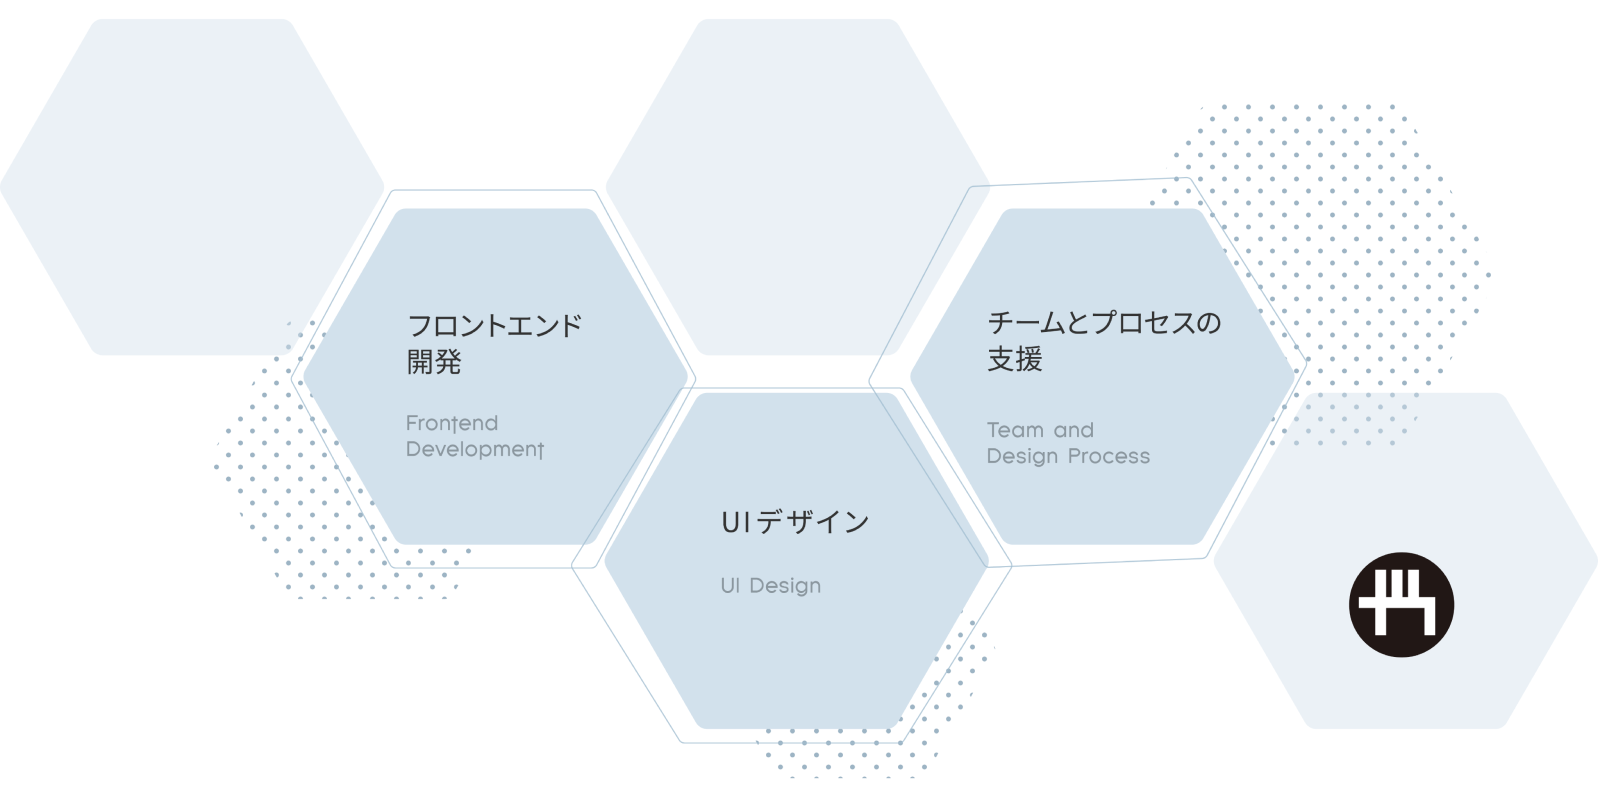 Gaji-Laboの得意とする領域。「フロントエンド開発」「UIデザイン」「チームとプロセス支援」